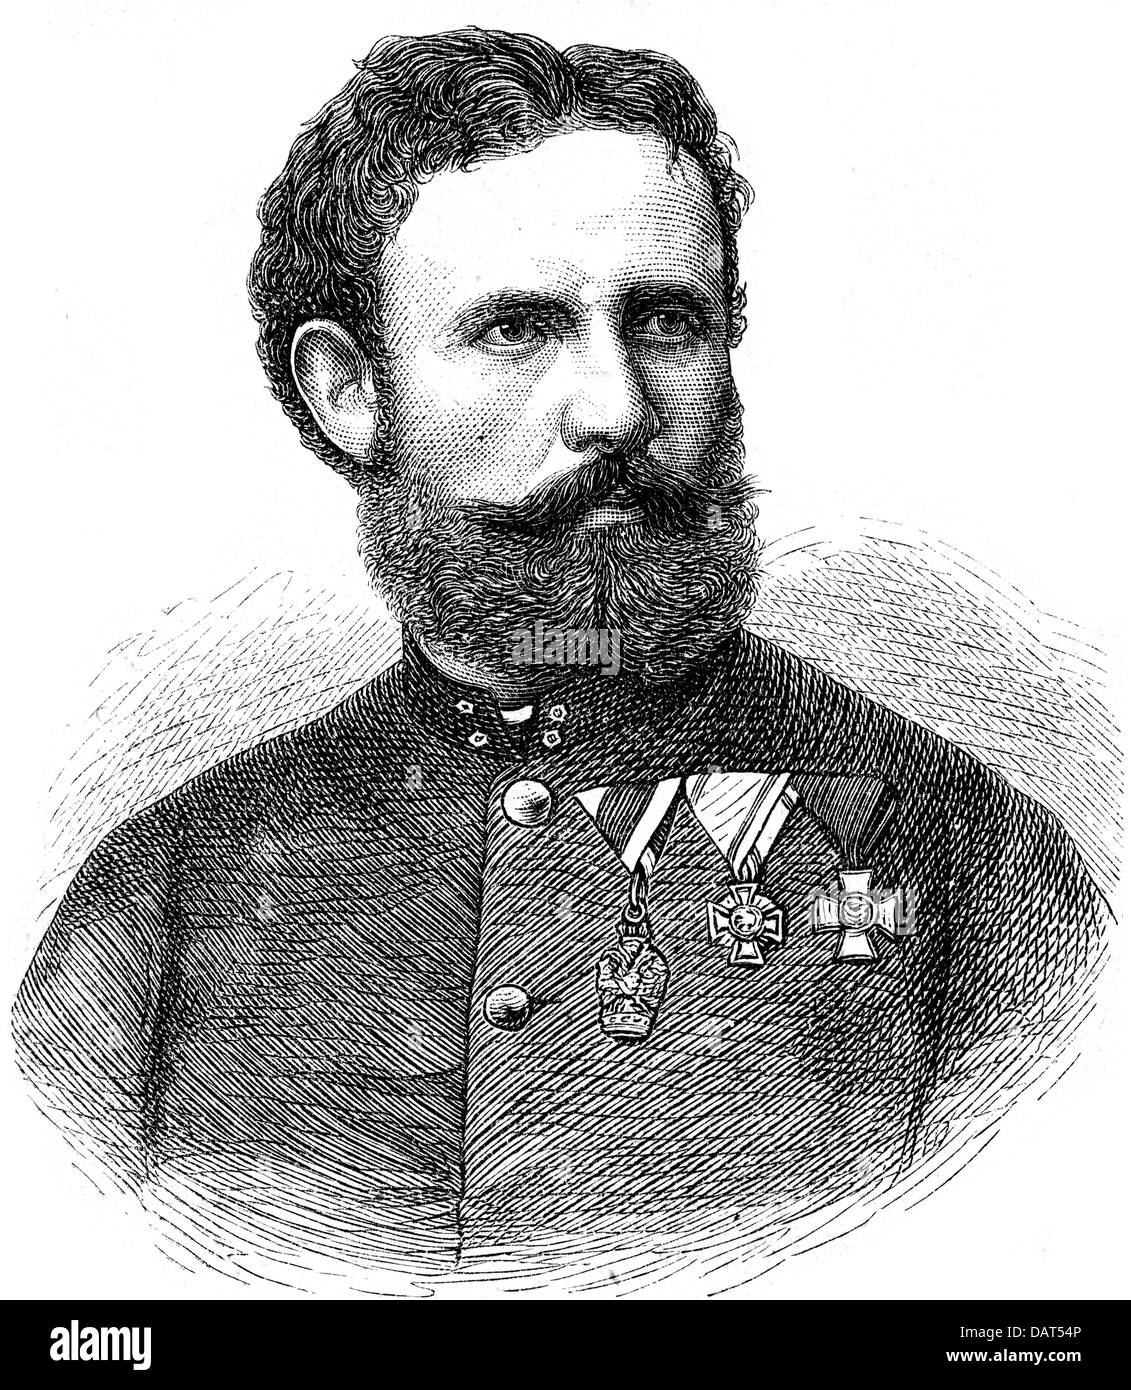 Payer, Julius, 1.9.1842 - 30.8.1915, Austrian arctic explorer, portrait, in uniform, wood engraving, 19th century, Stock Photo